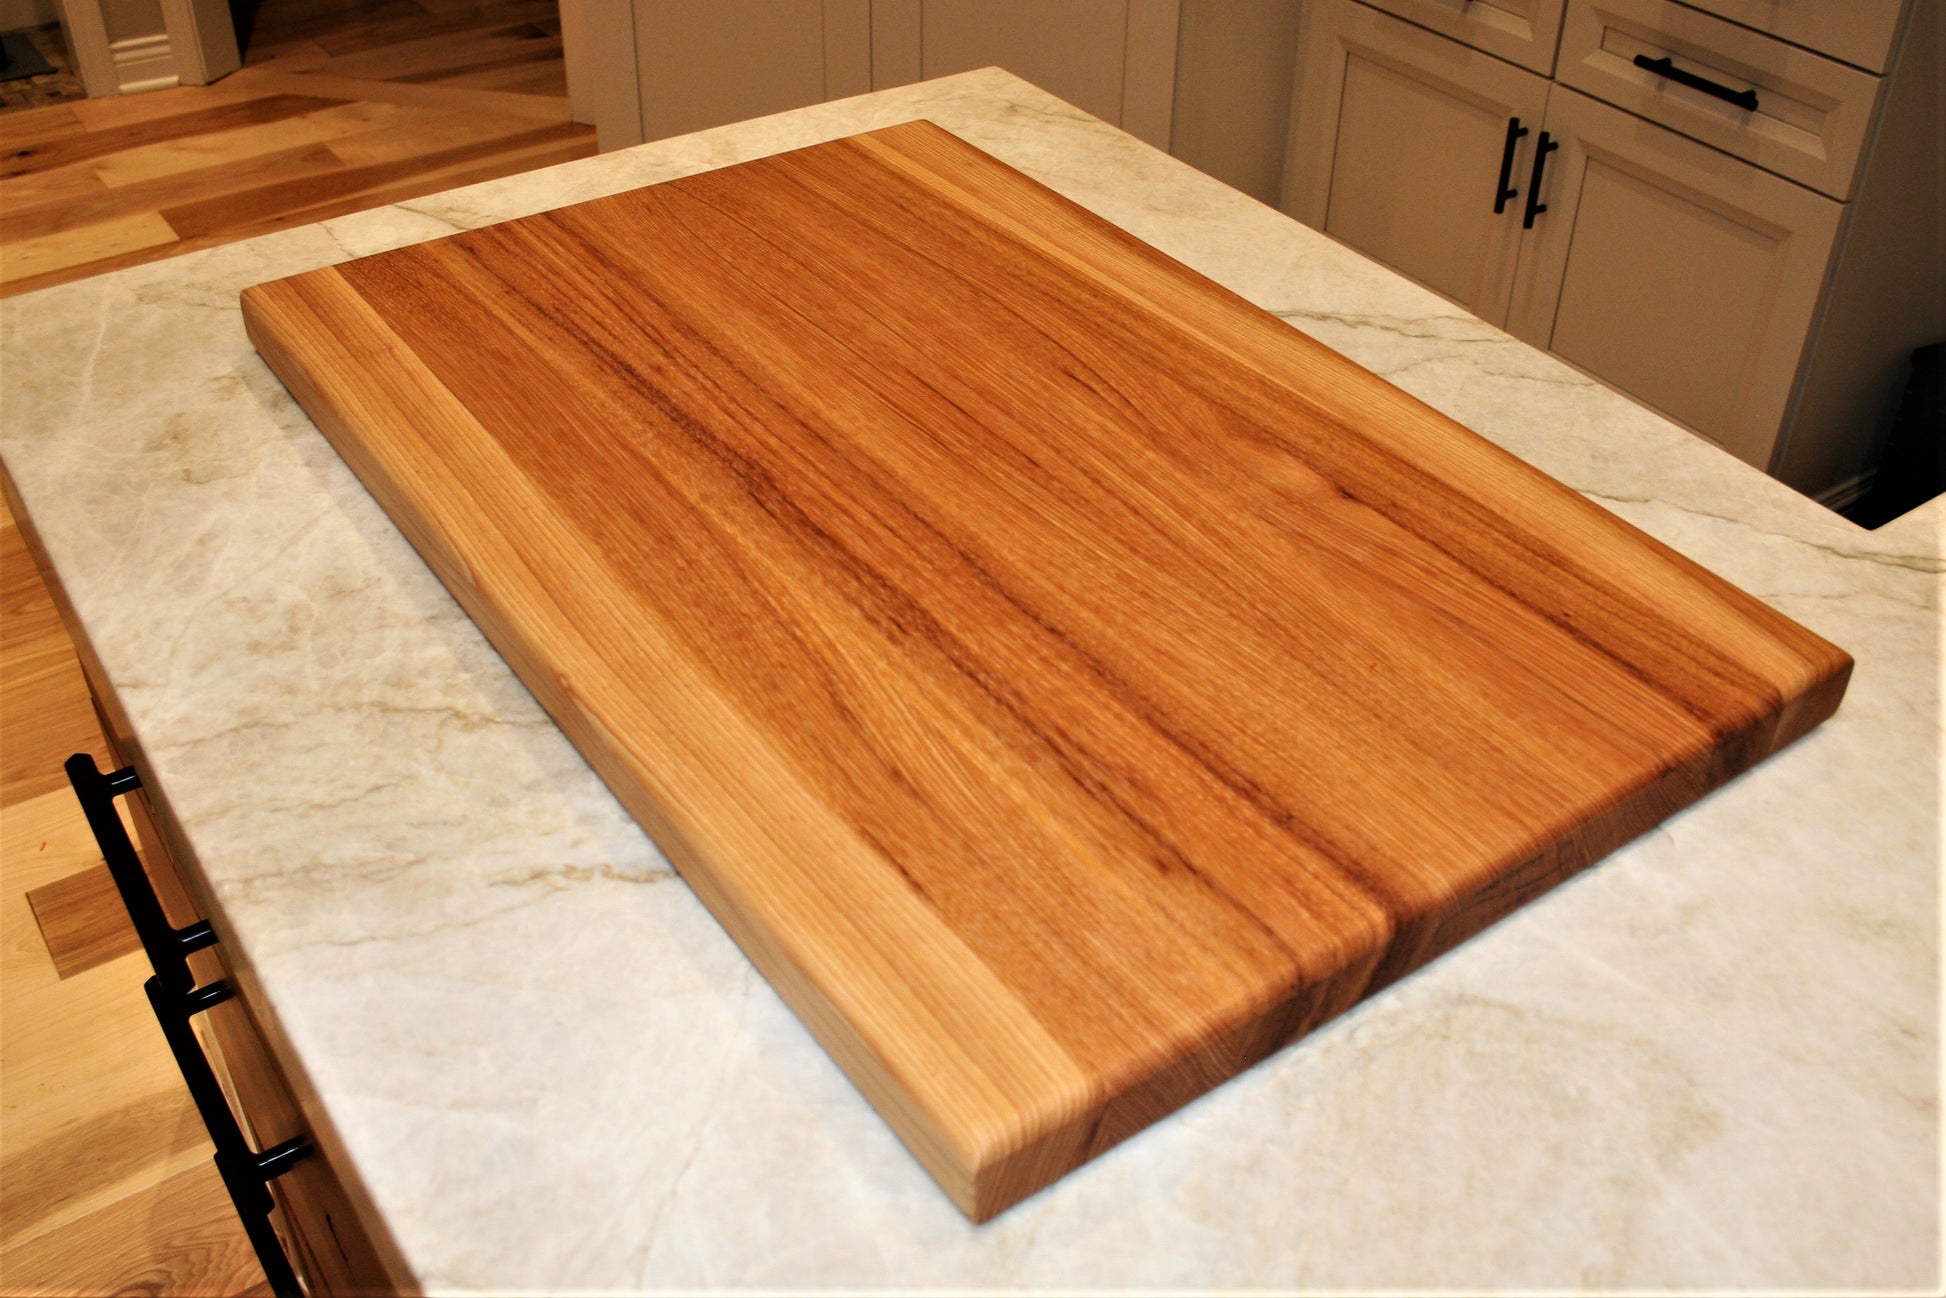 Cutting Board - 10x8 Inches Small Wood Cutting Board - Oak Cutting Board -  20 mm Thin Cutting Board - Real Wood Cutting Board - Chopping Board for  Kitchen - Edge Grain Oak Wood Board 